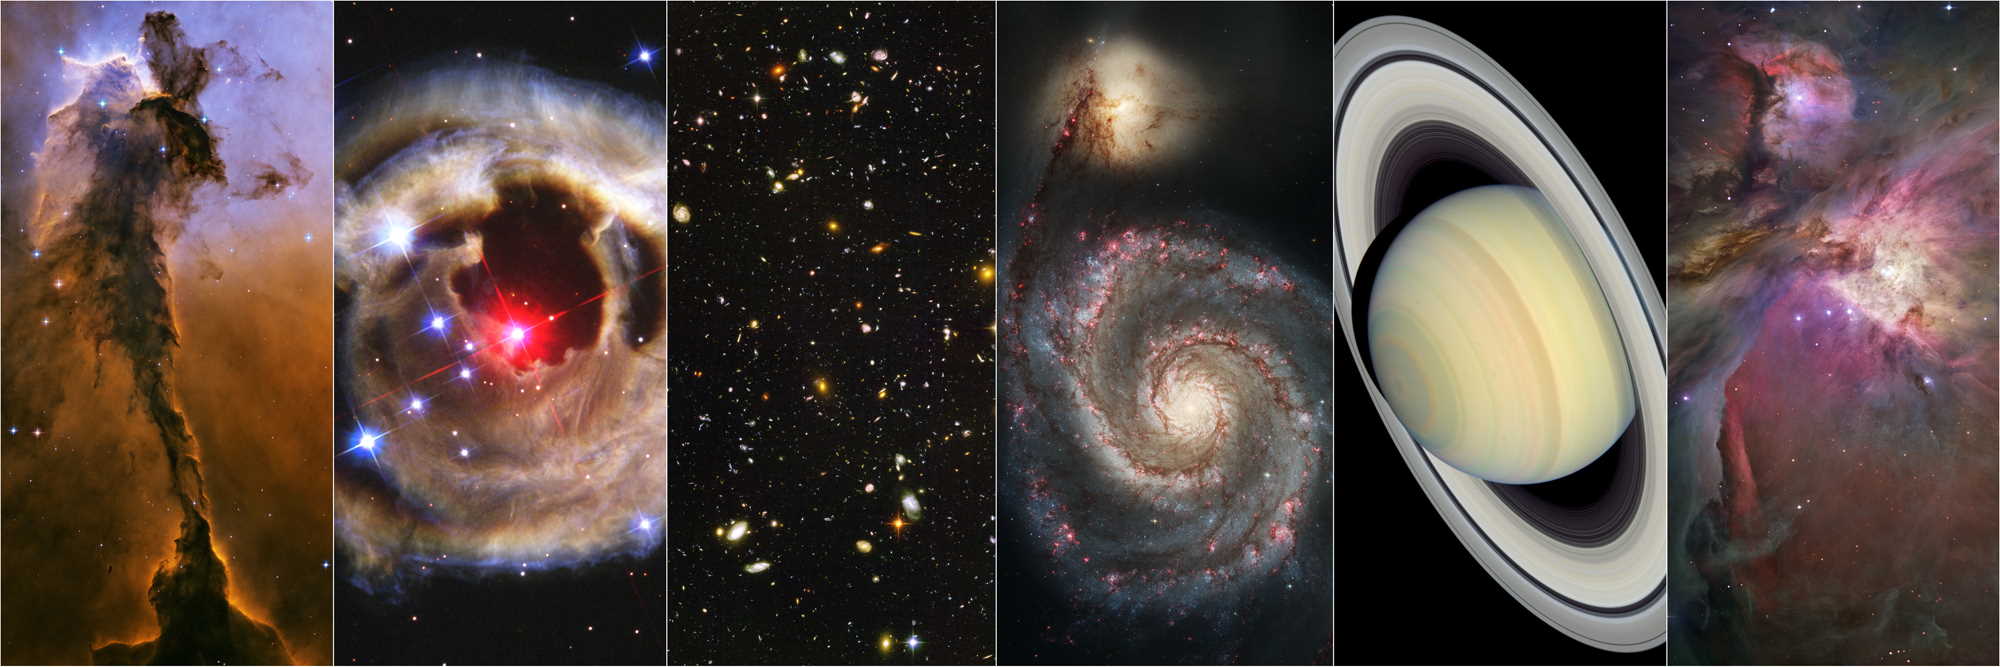 NASA, ESA, STScI